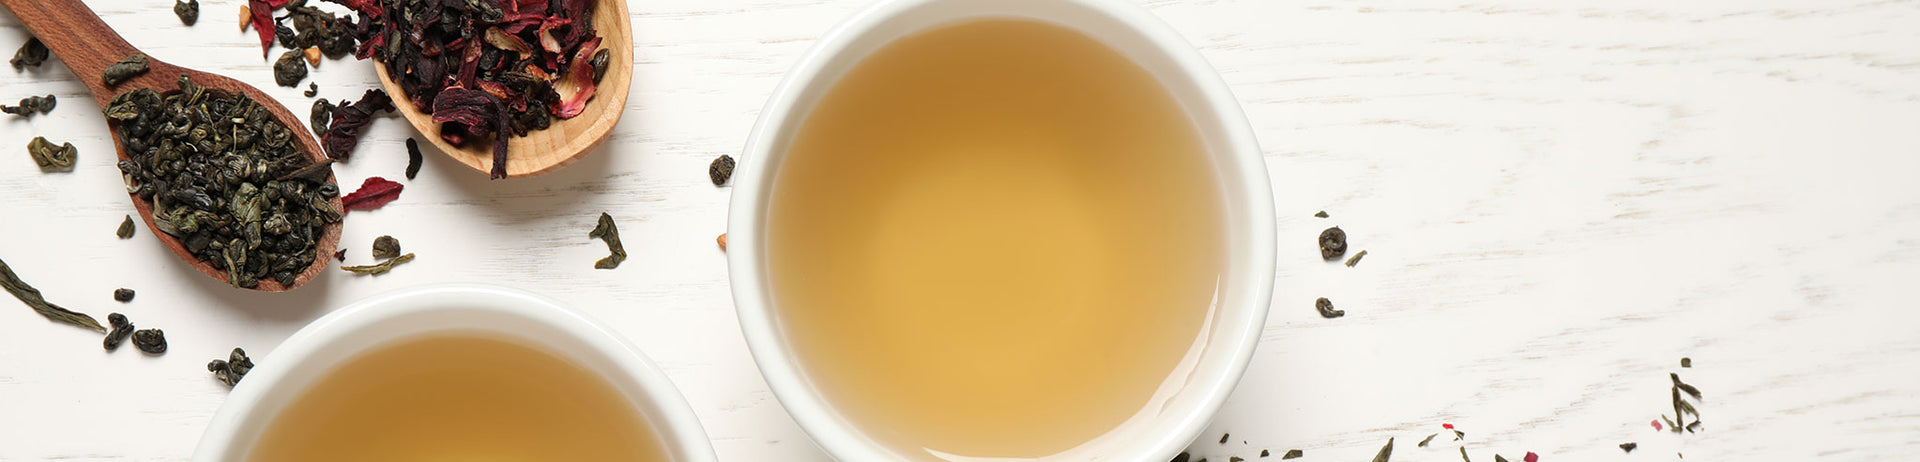 Natural Benefits Slim – Ahmad Tea Nigeria